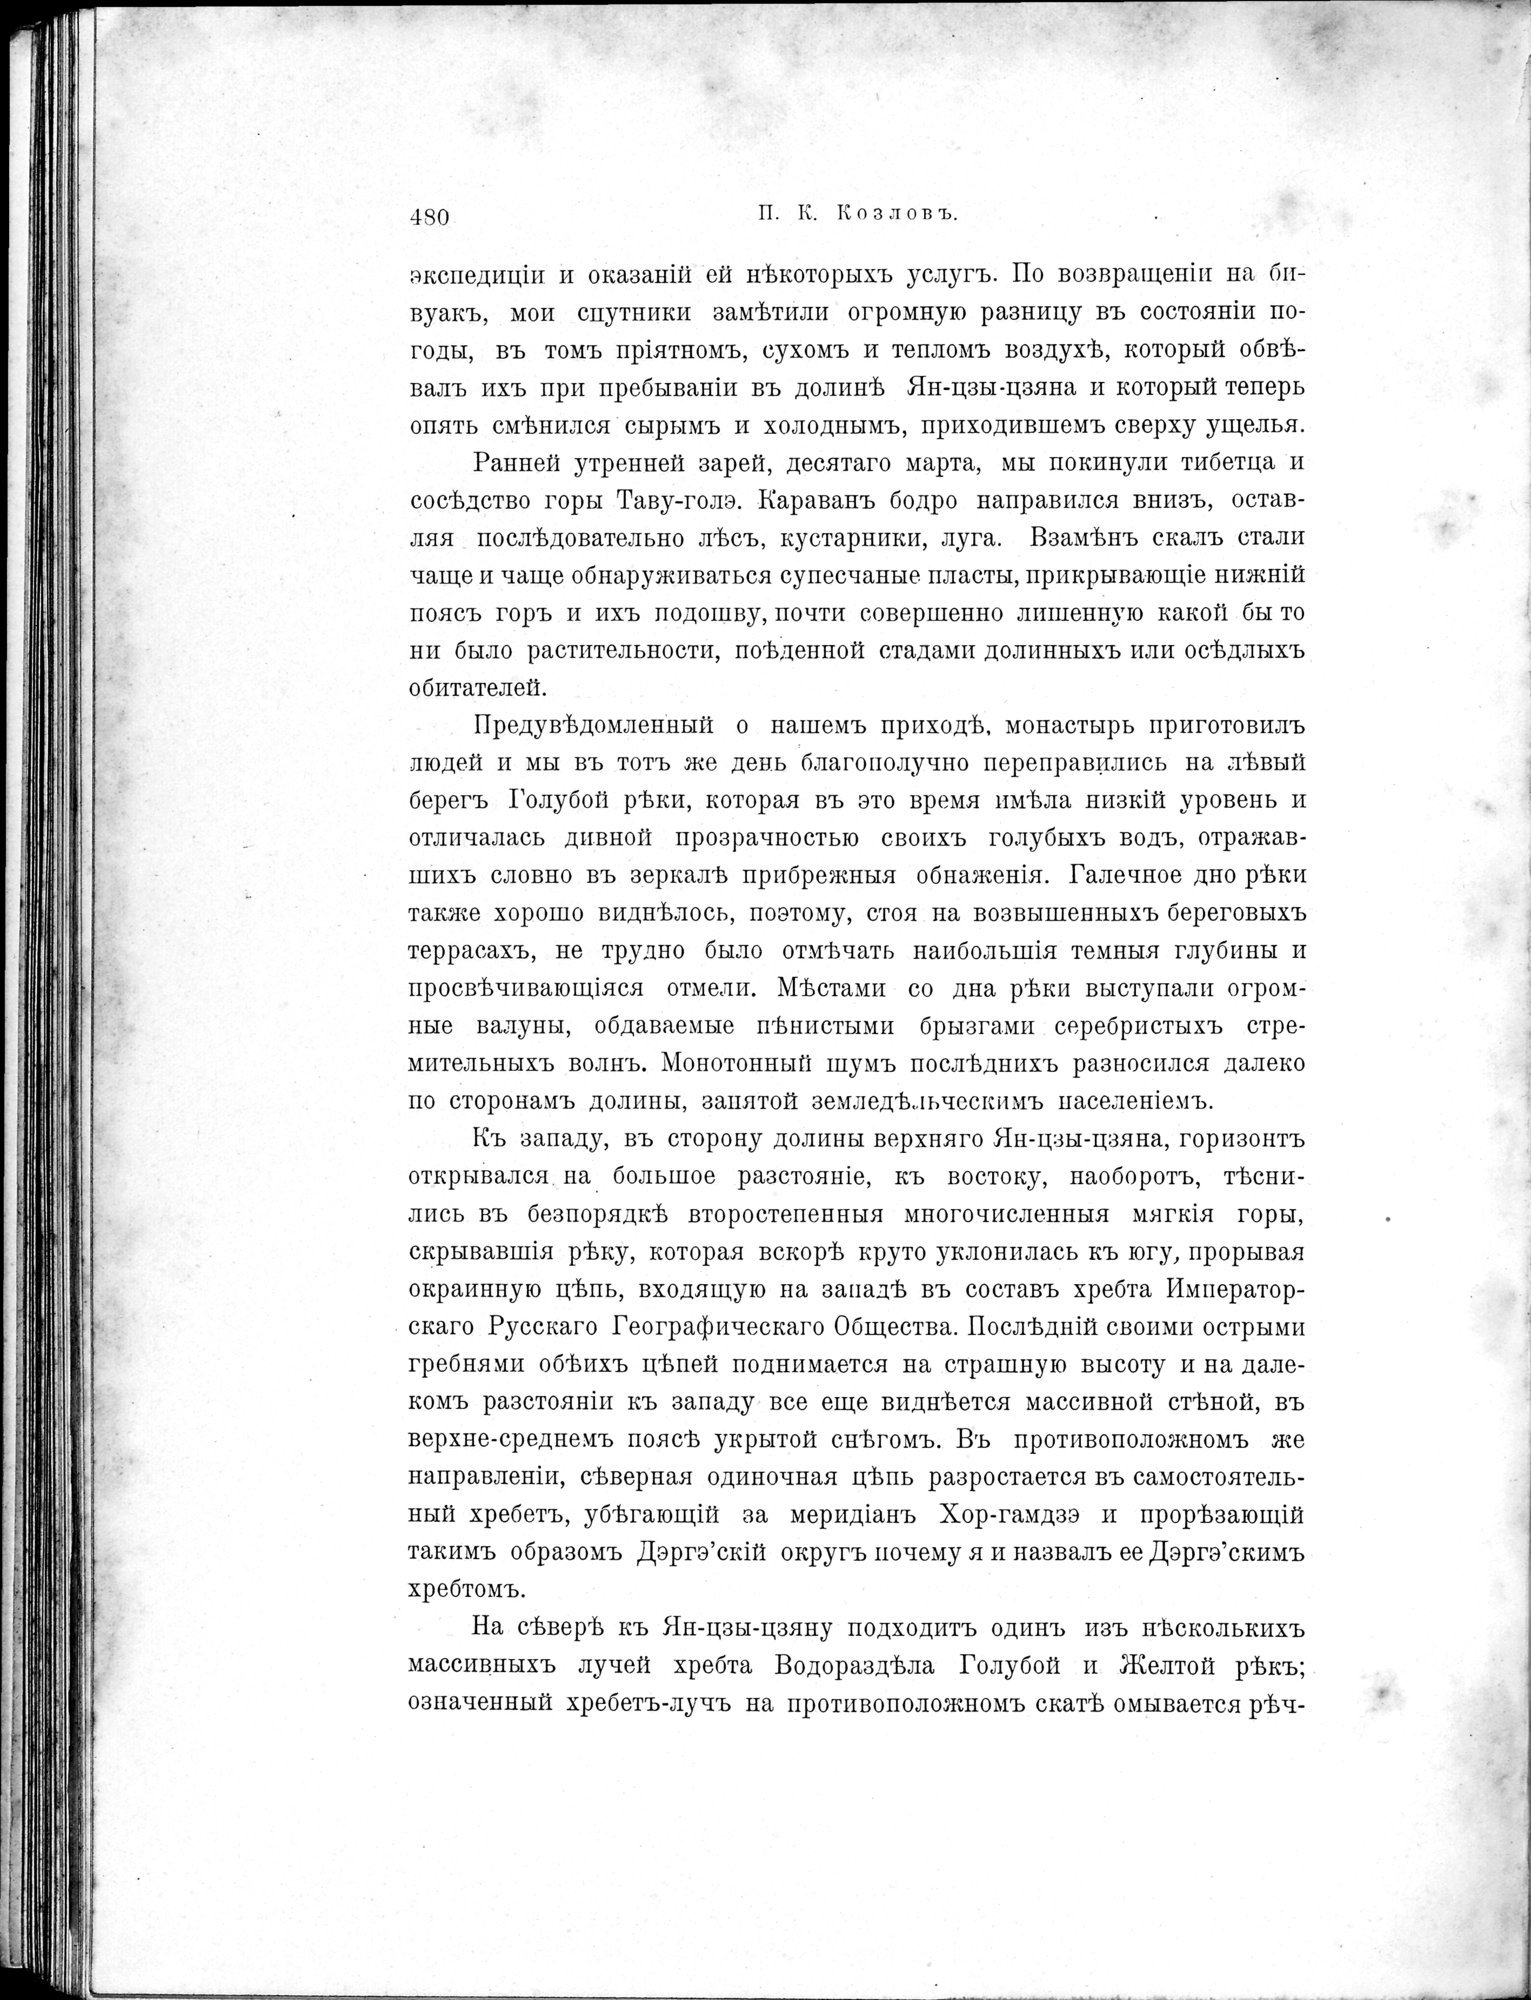 Mongoliia i Kam : vol.2 / Page 290 (Grayscale High Resolution Image)